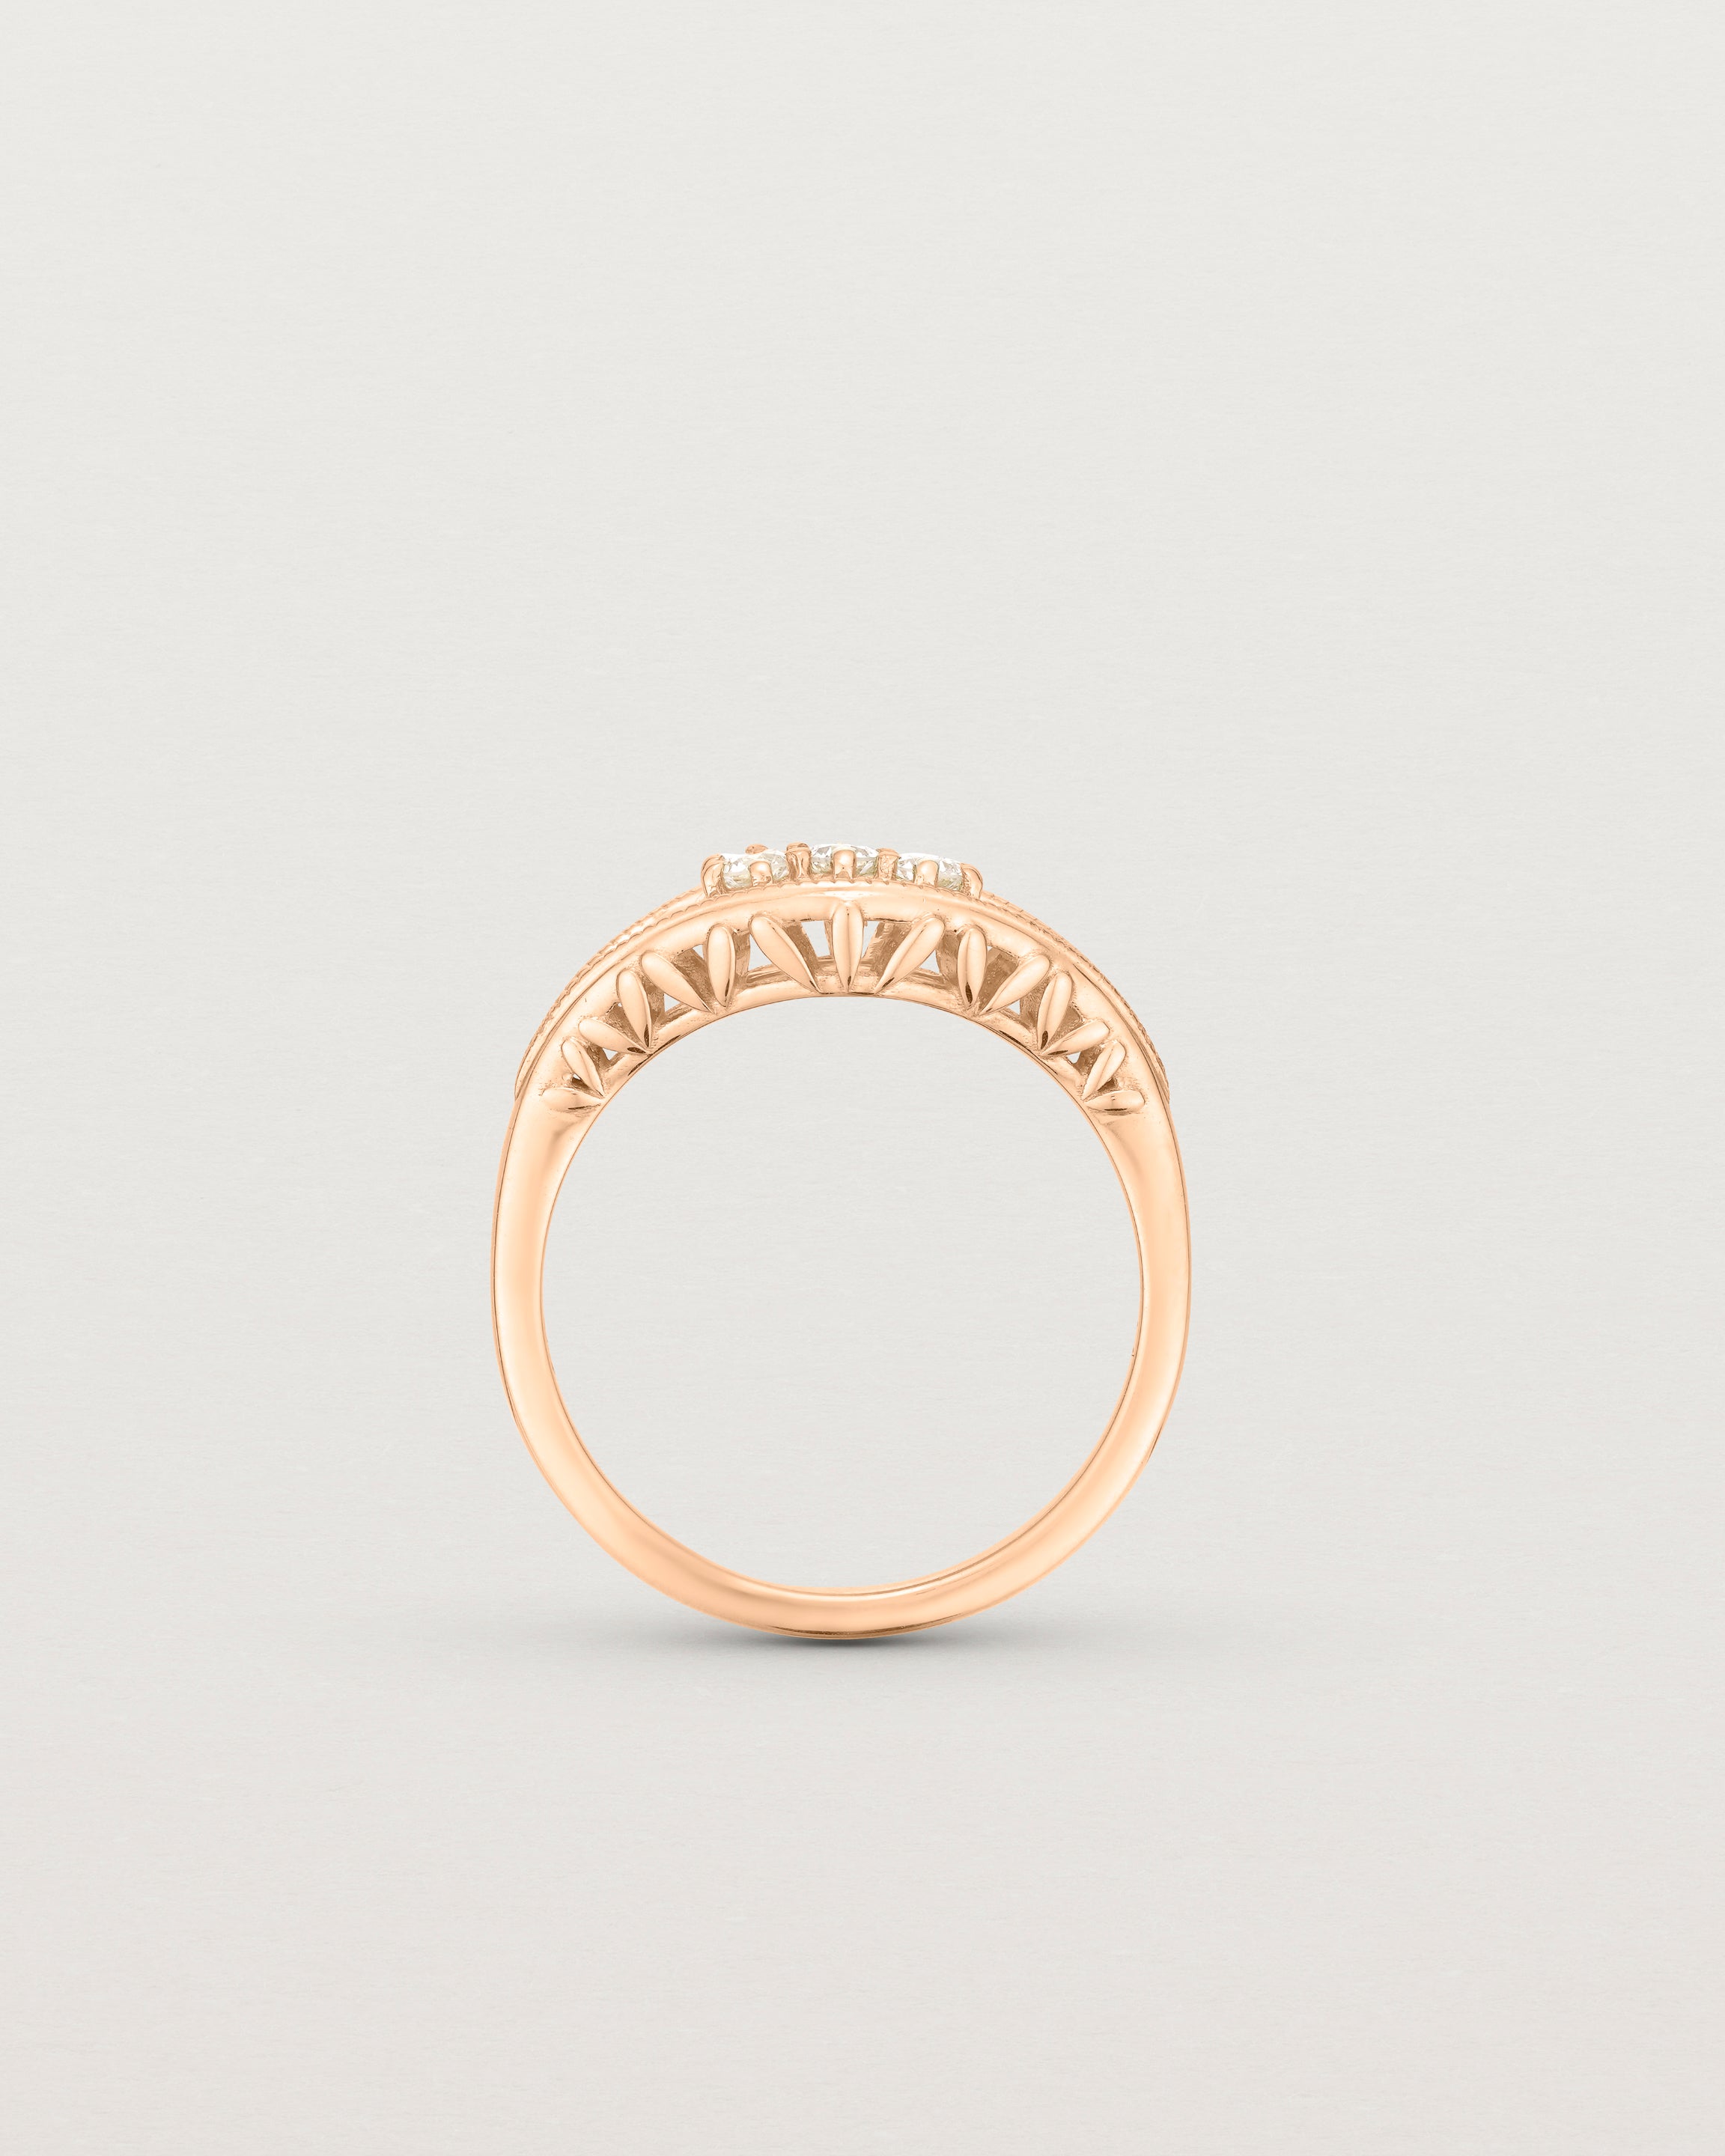 Bonnie Shield Ring | Vintage Inspired